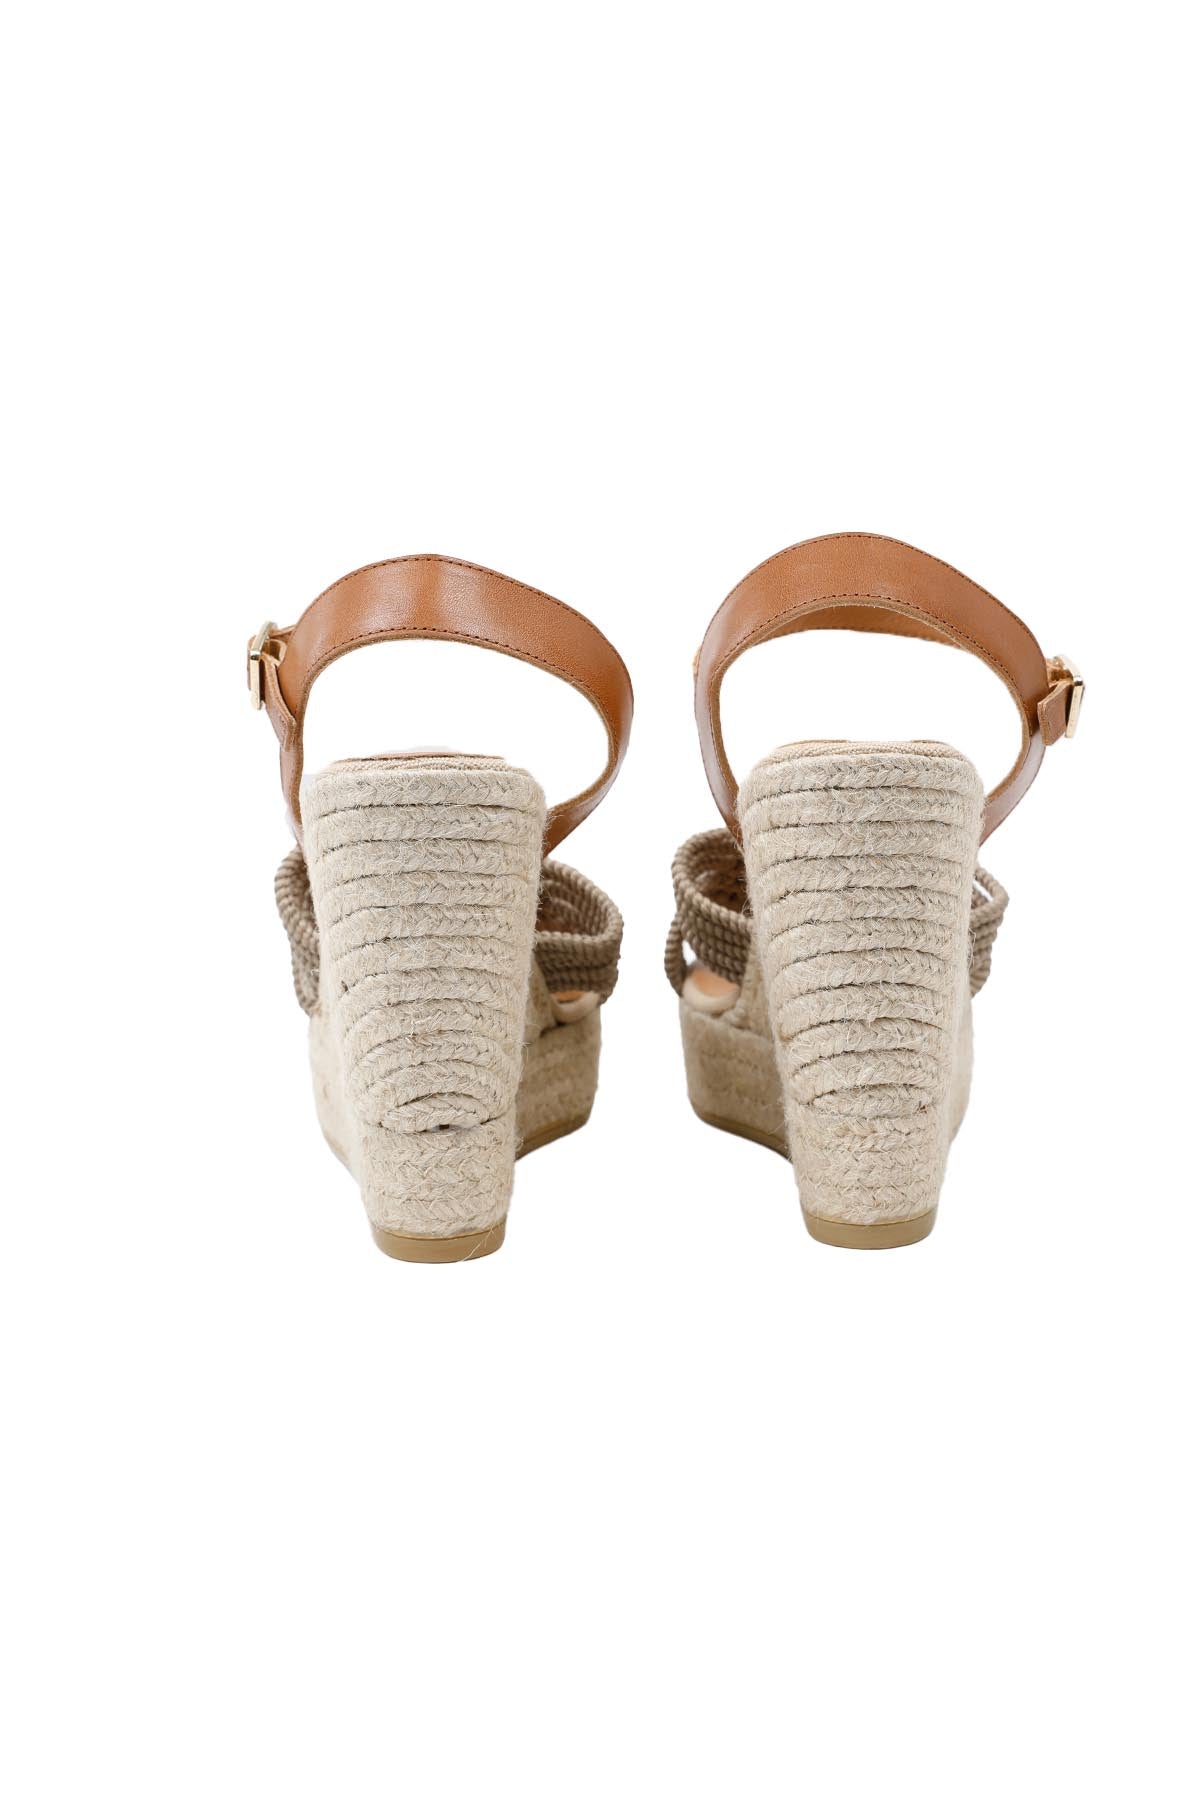 Kanna Örgü Bantlı Hasır Dolgu Topuk Sandalet-Libas Trendy Fashion Store